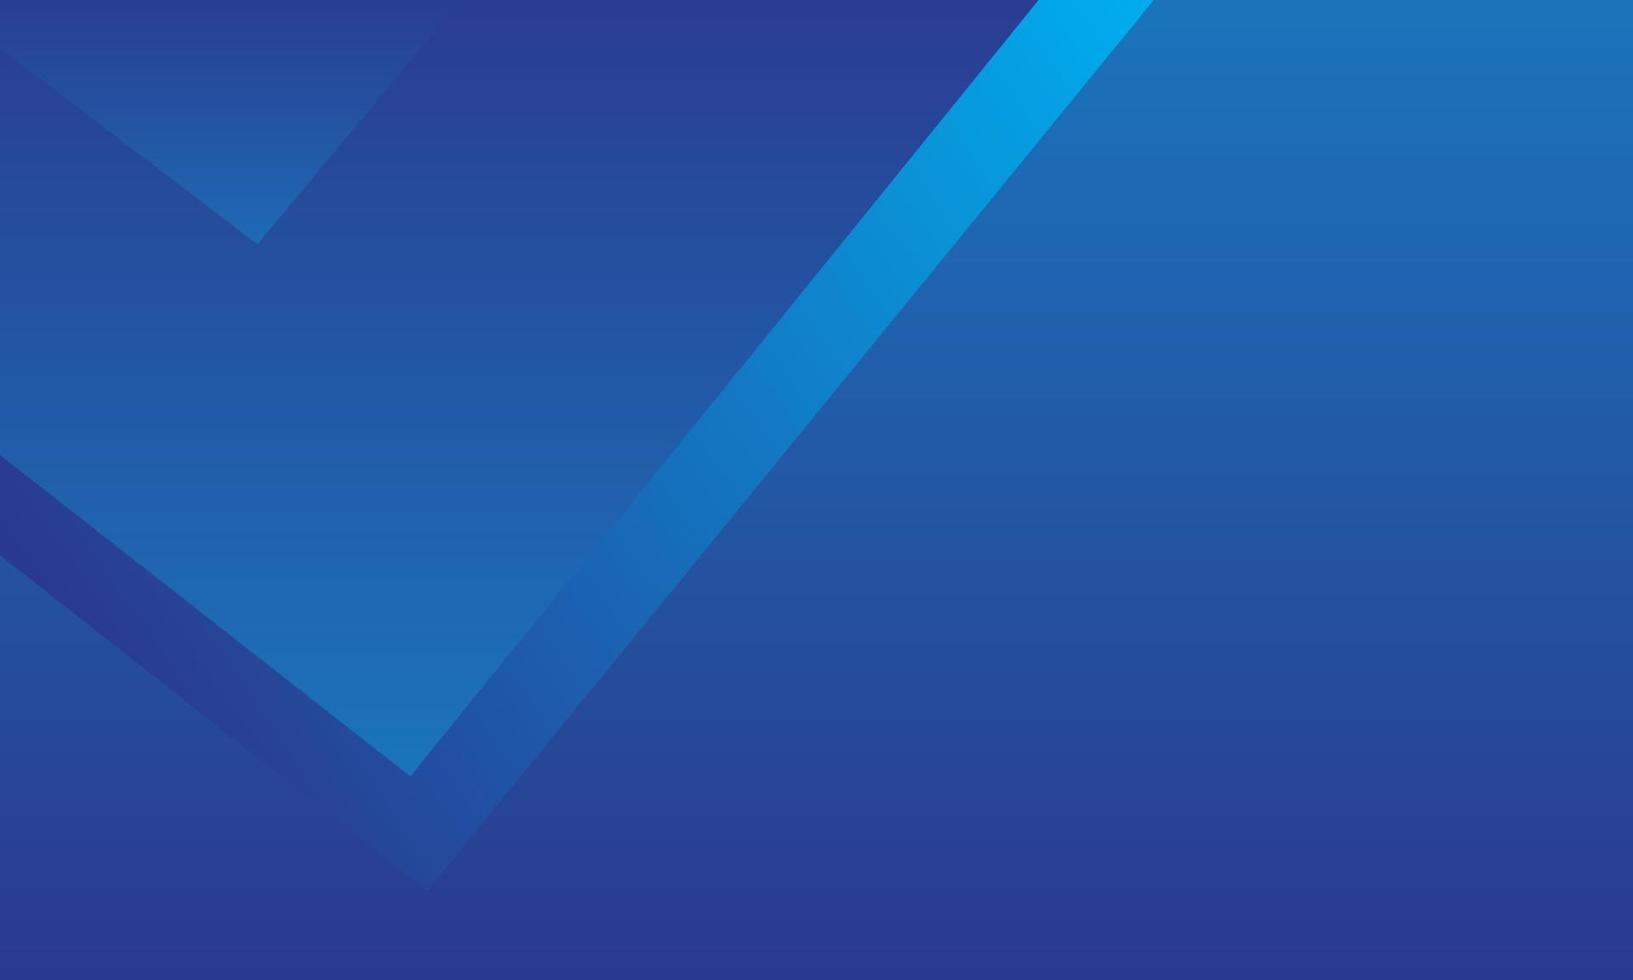 póster de fondo azul con presentación comercial de borde de marco de triángulo dinámico con concepto de red de tecnología moderna vector